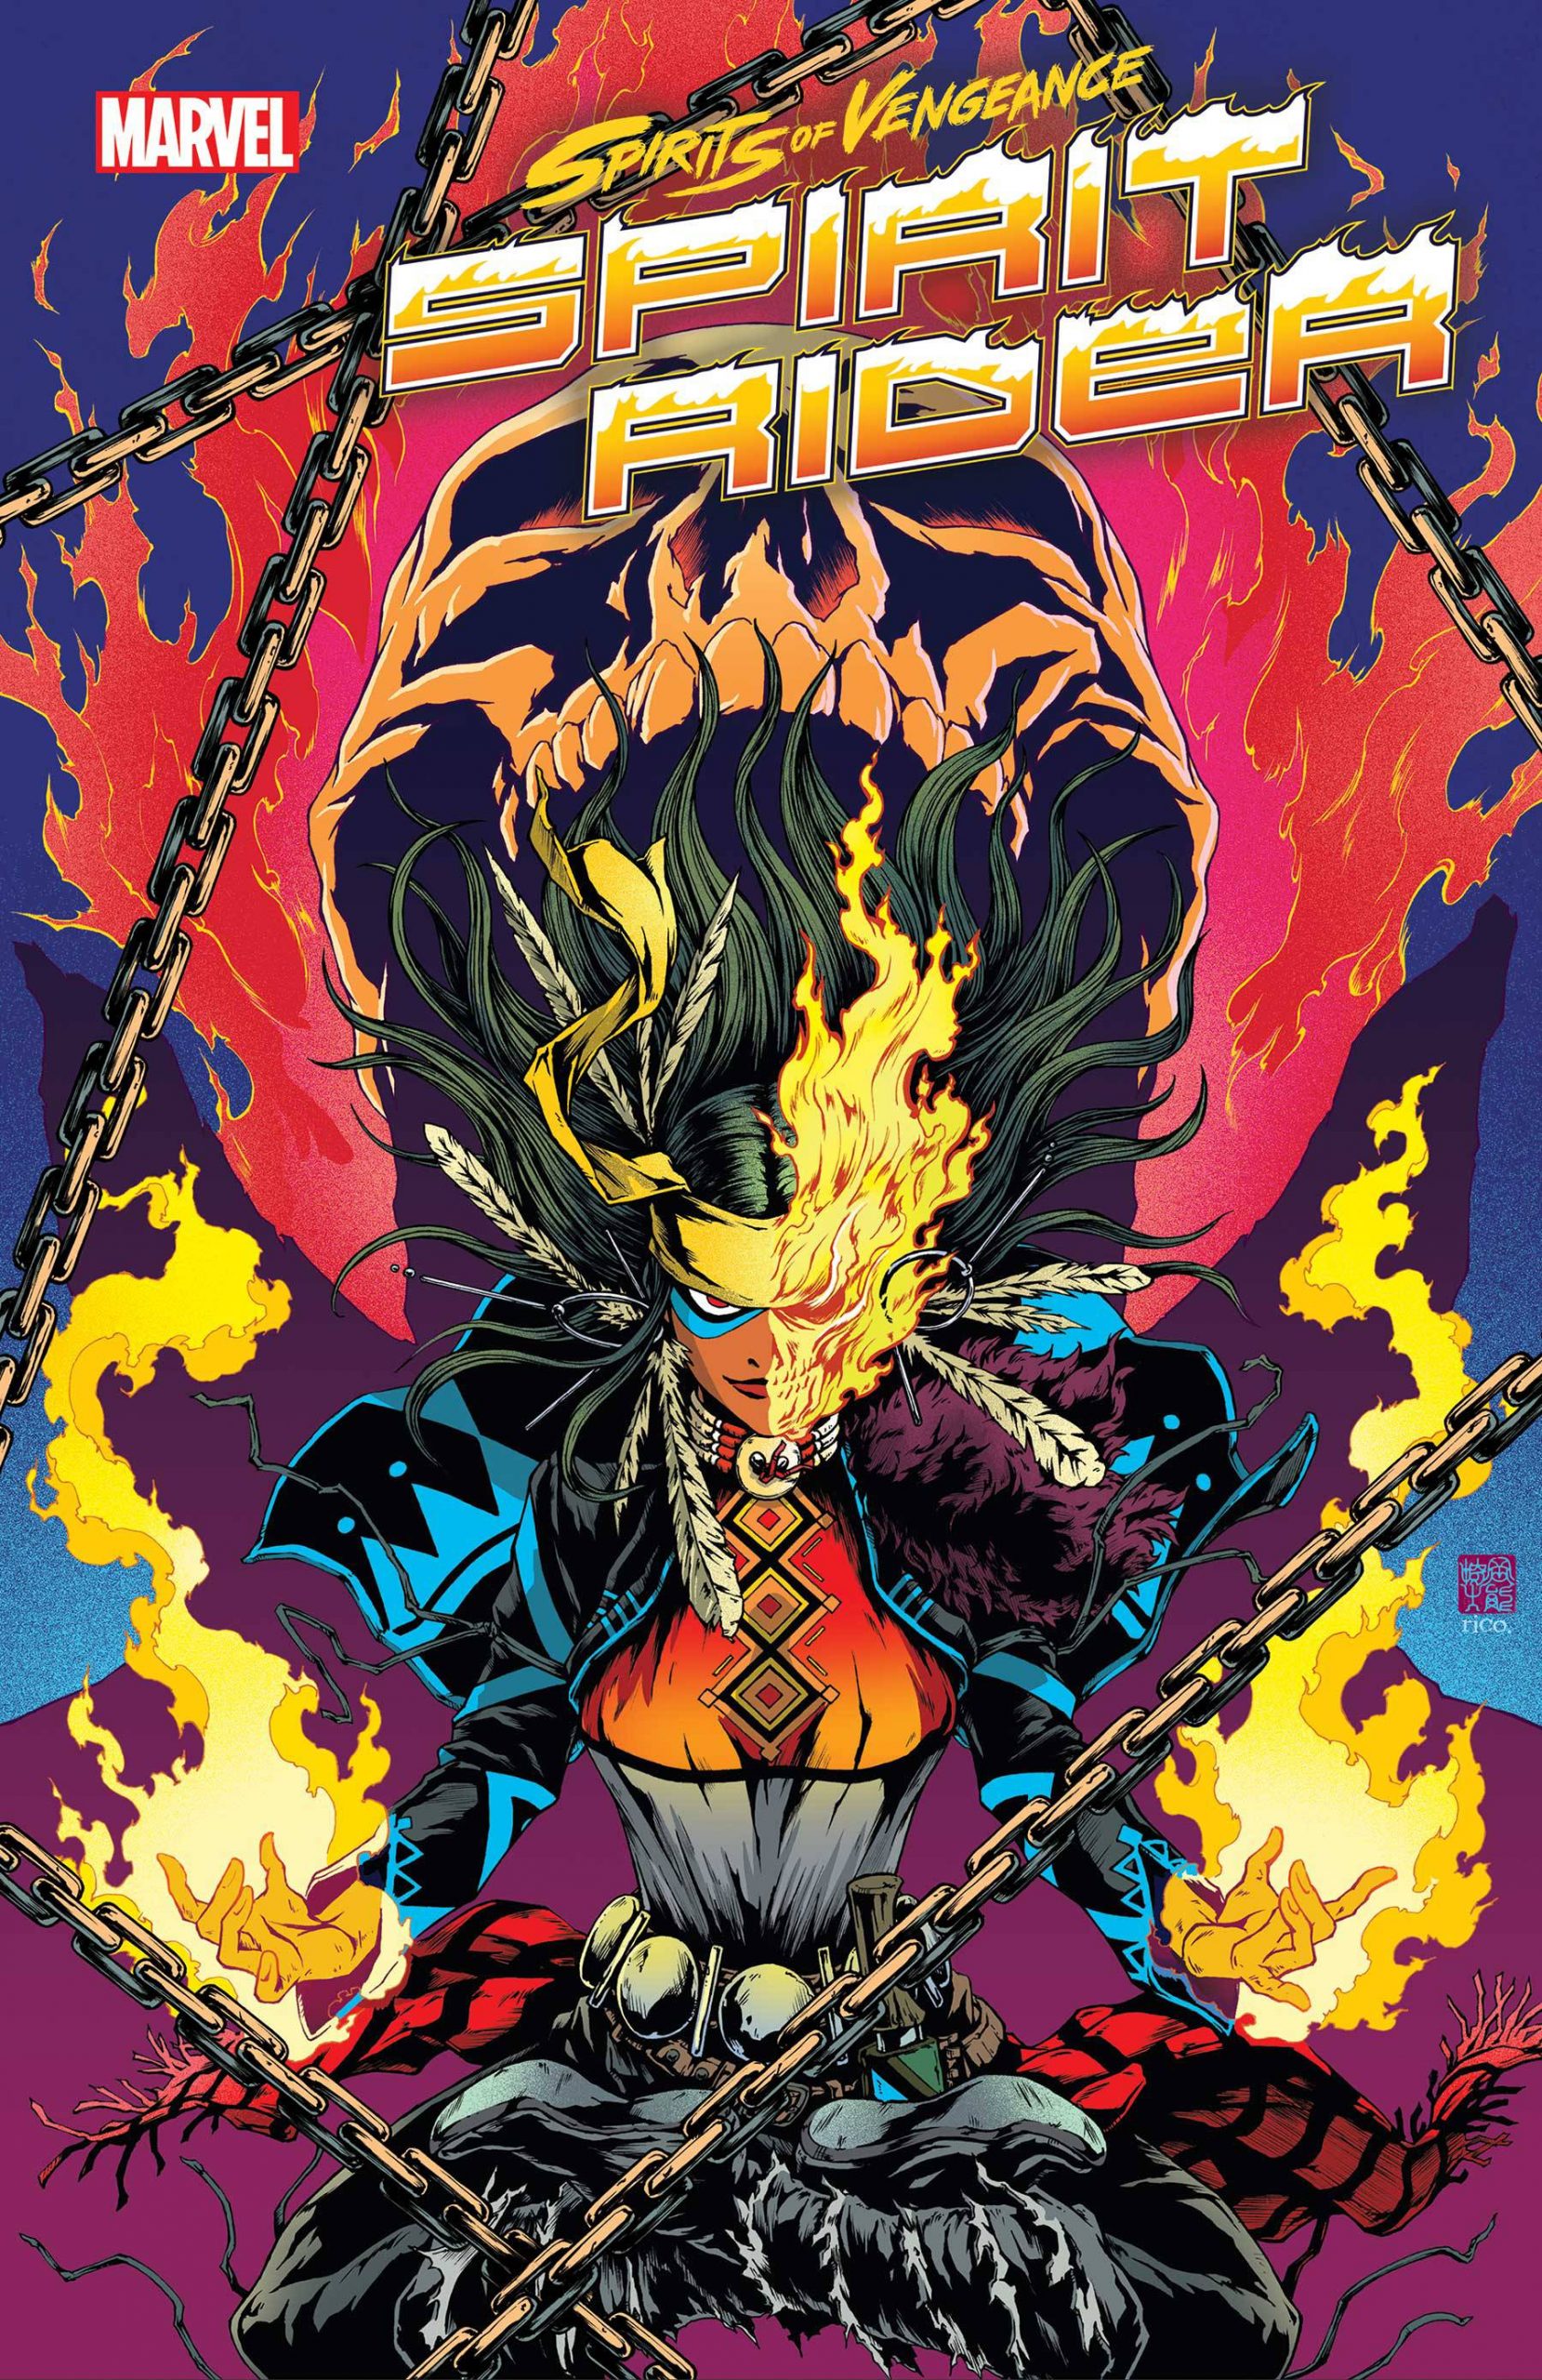 Marvel First Look: Spirits of Vengeance: Spirit Rider #1